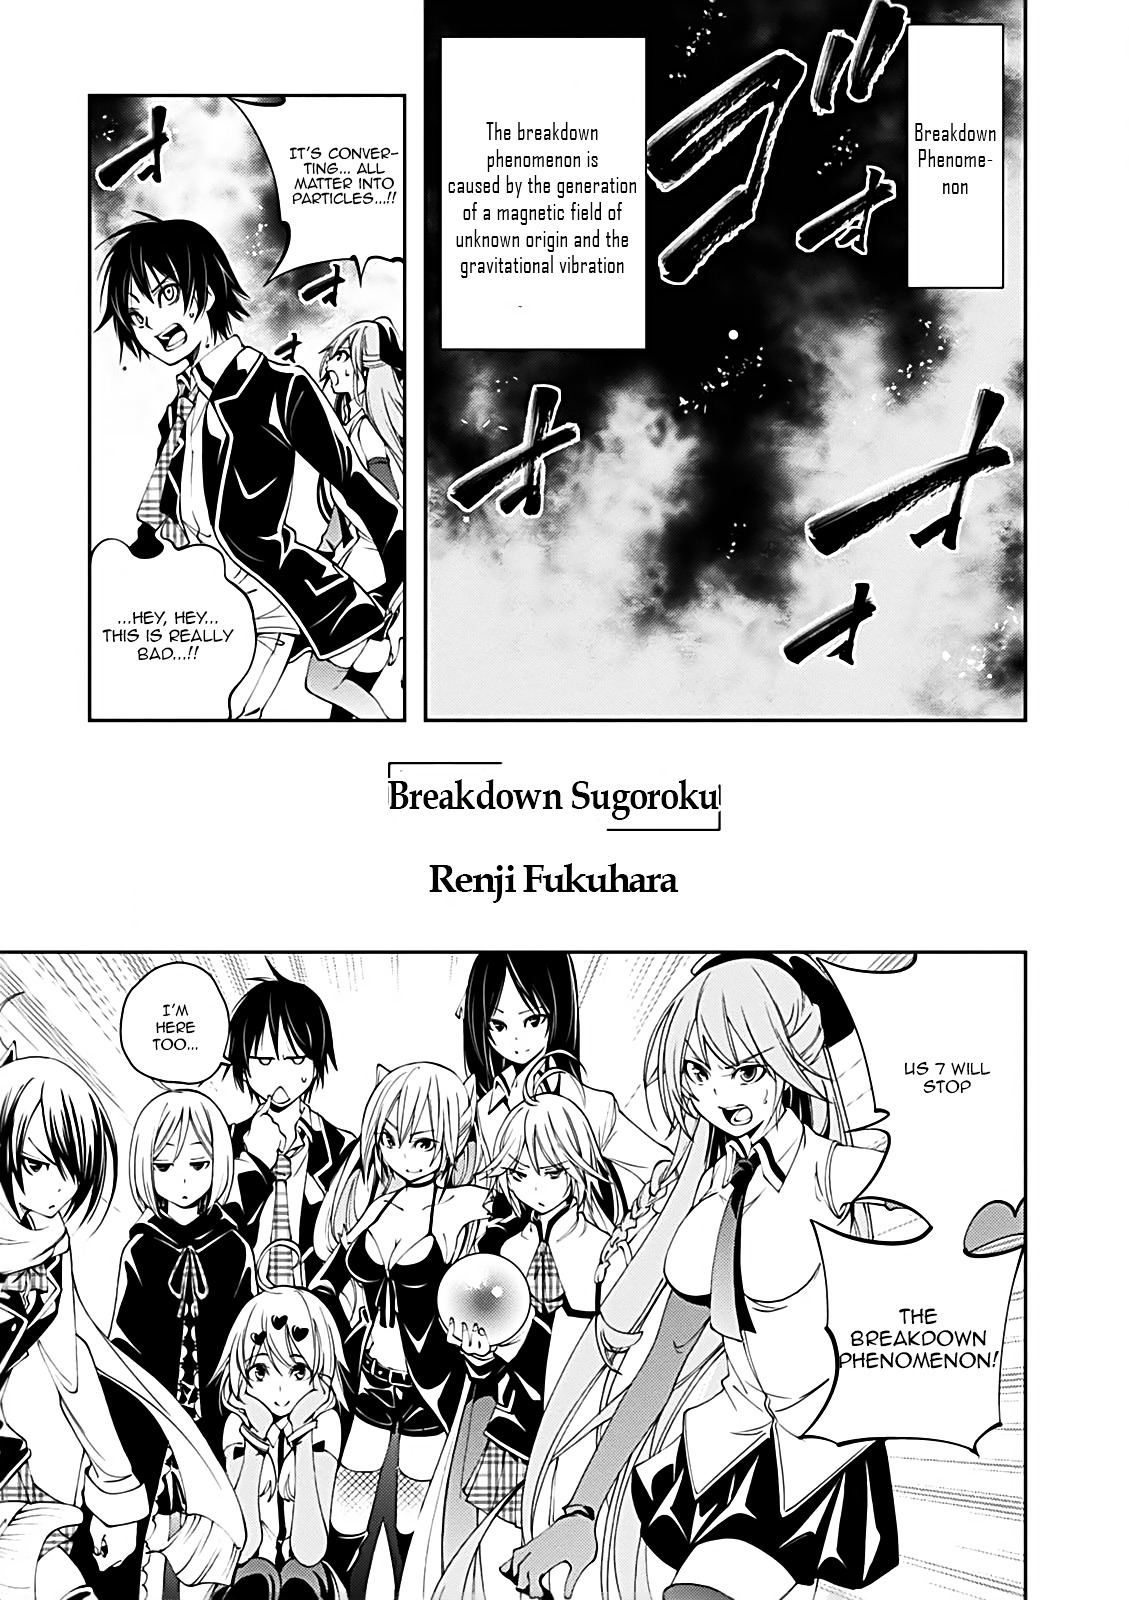 Trinity Seven - 7-Nin No Mahoutsukai Comic Anthology Vol.1 Chapter 10 : Breakdown Sugoroku - Picture 2